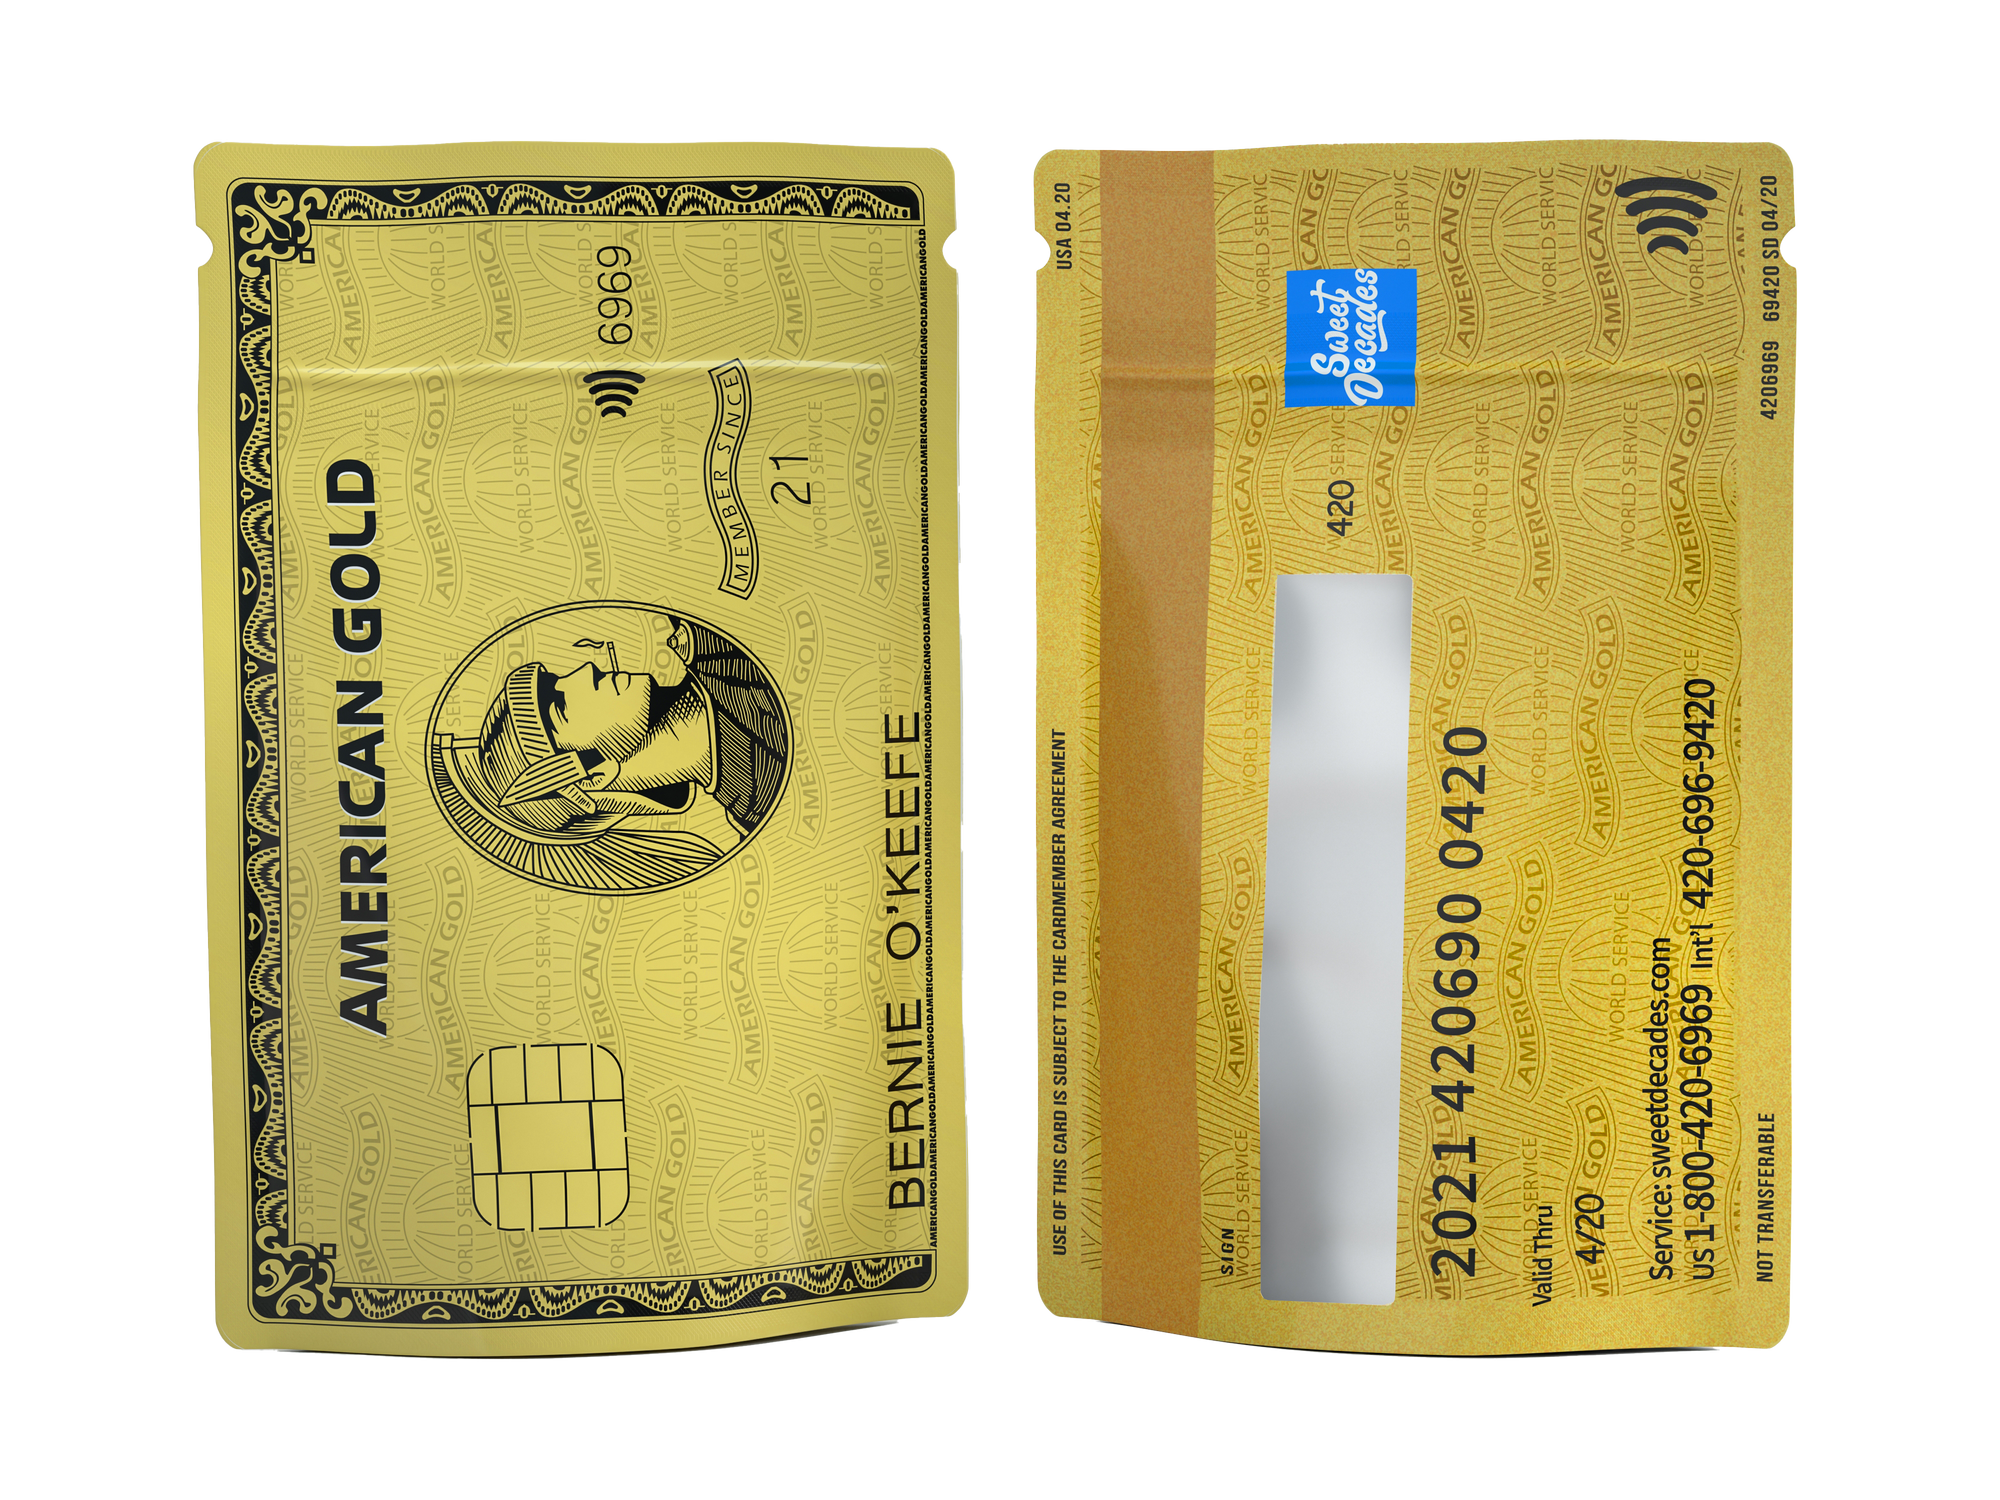 "American Gold Credit Card" (3.5 x 4.5 inch, 5g)